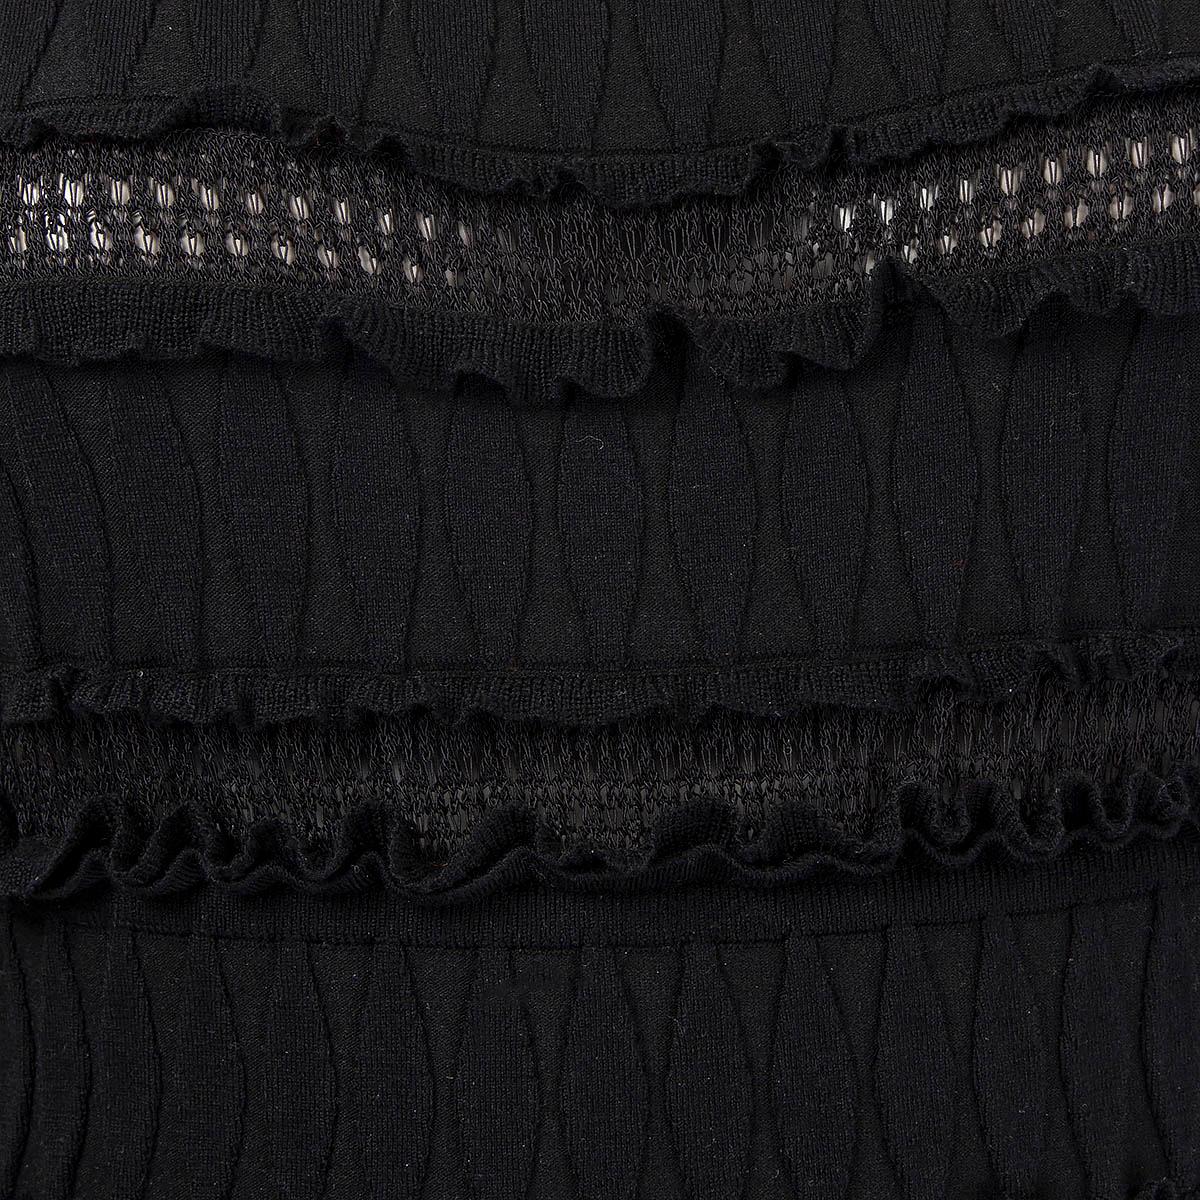 ALAIA black wool blend RUFFLED SLEEVELESS KNIT Dress 40 M For Sale 1